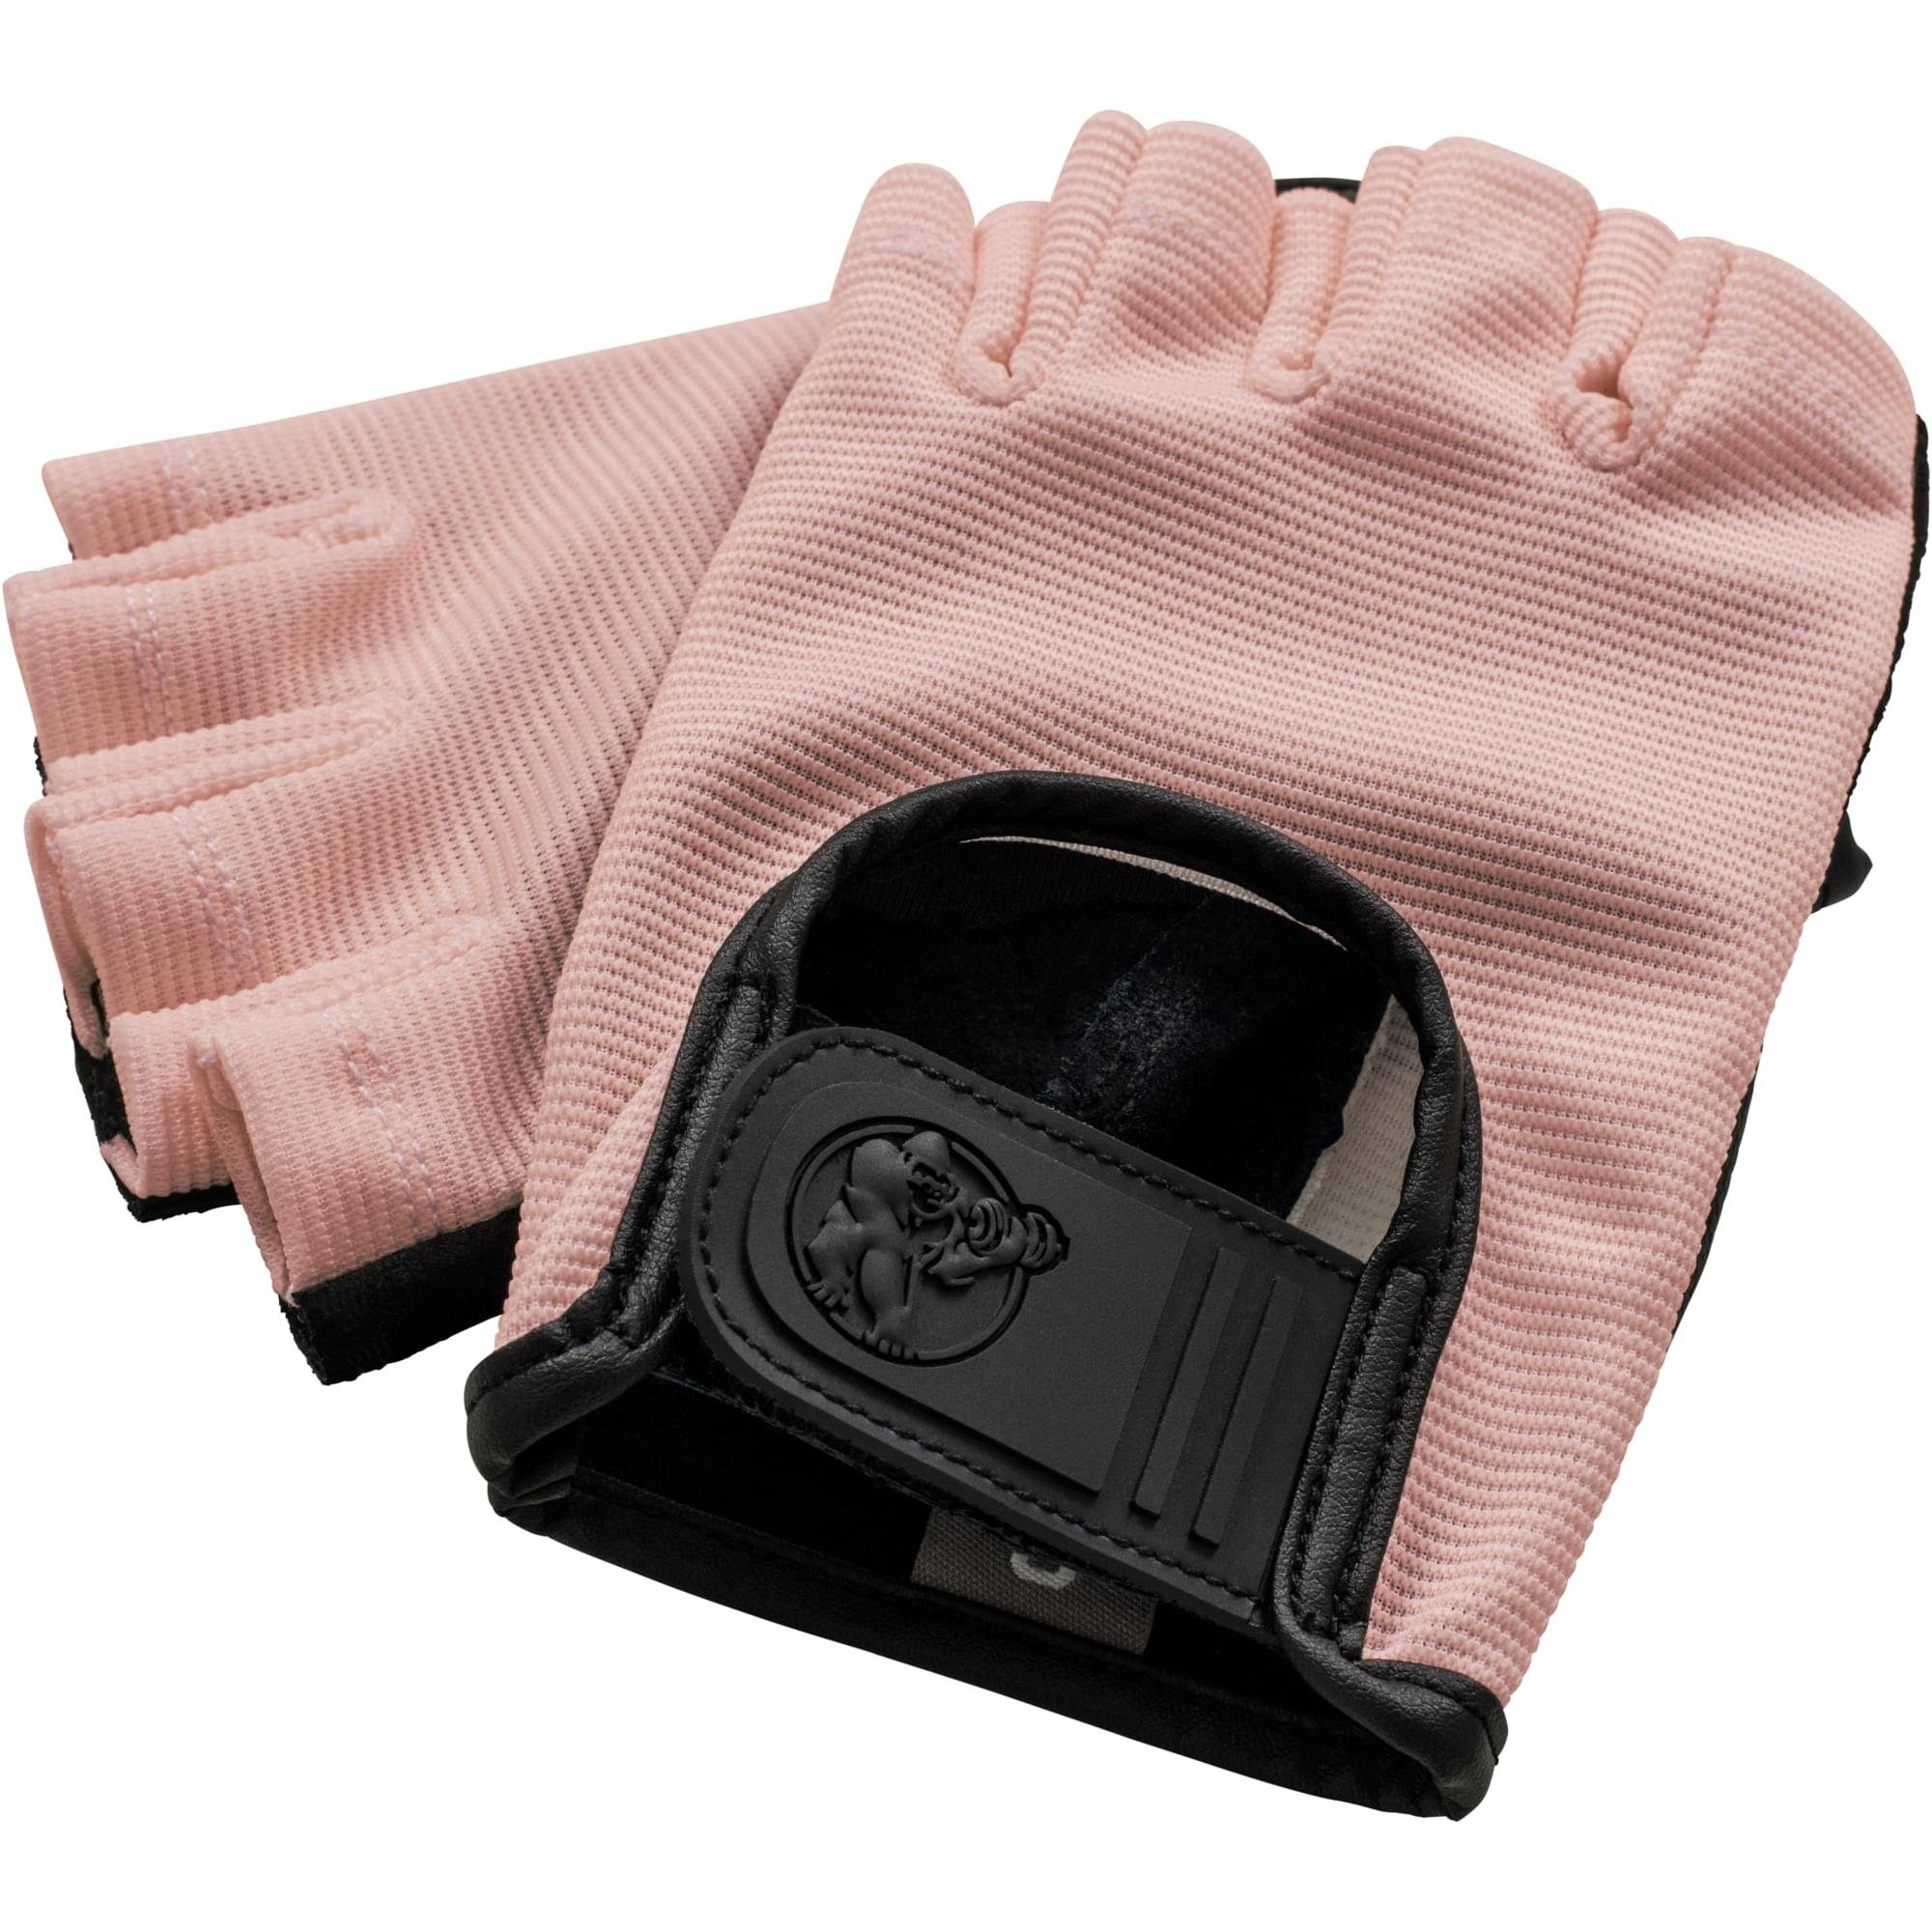 GORILLA SPORTS Trainingshandschuhe Farbwahl Rosa - Handschuhe Fitness - Sporthandschuhe Leder, XS/S/M/L/XL